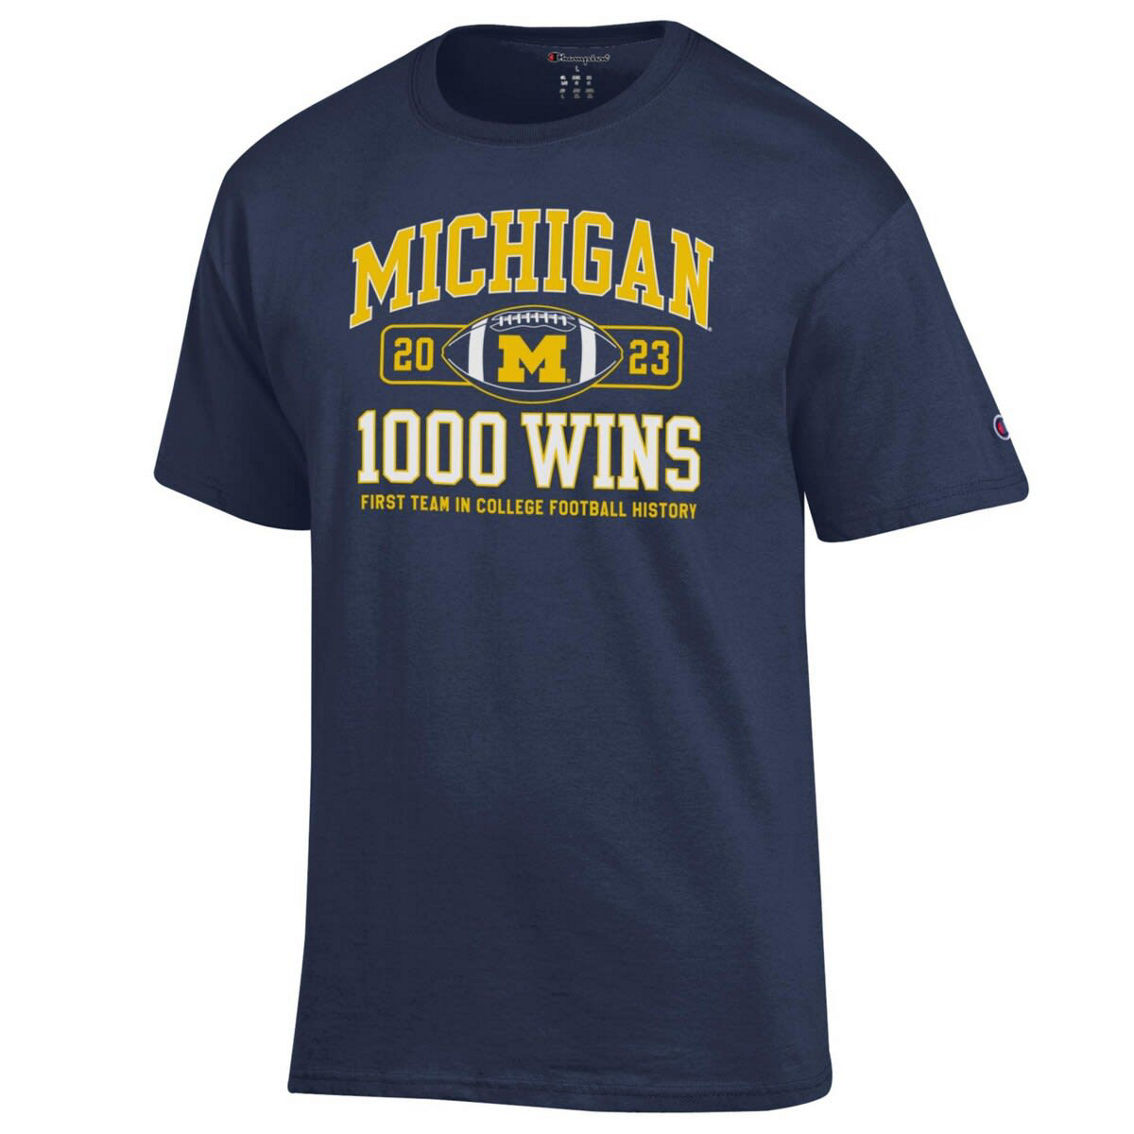 Champion Men's Navy Michigan Wolverines Football 1,000 Wins T-Shirt - Image 3 of 4